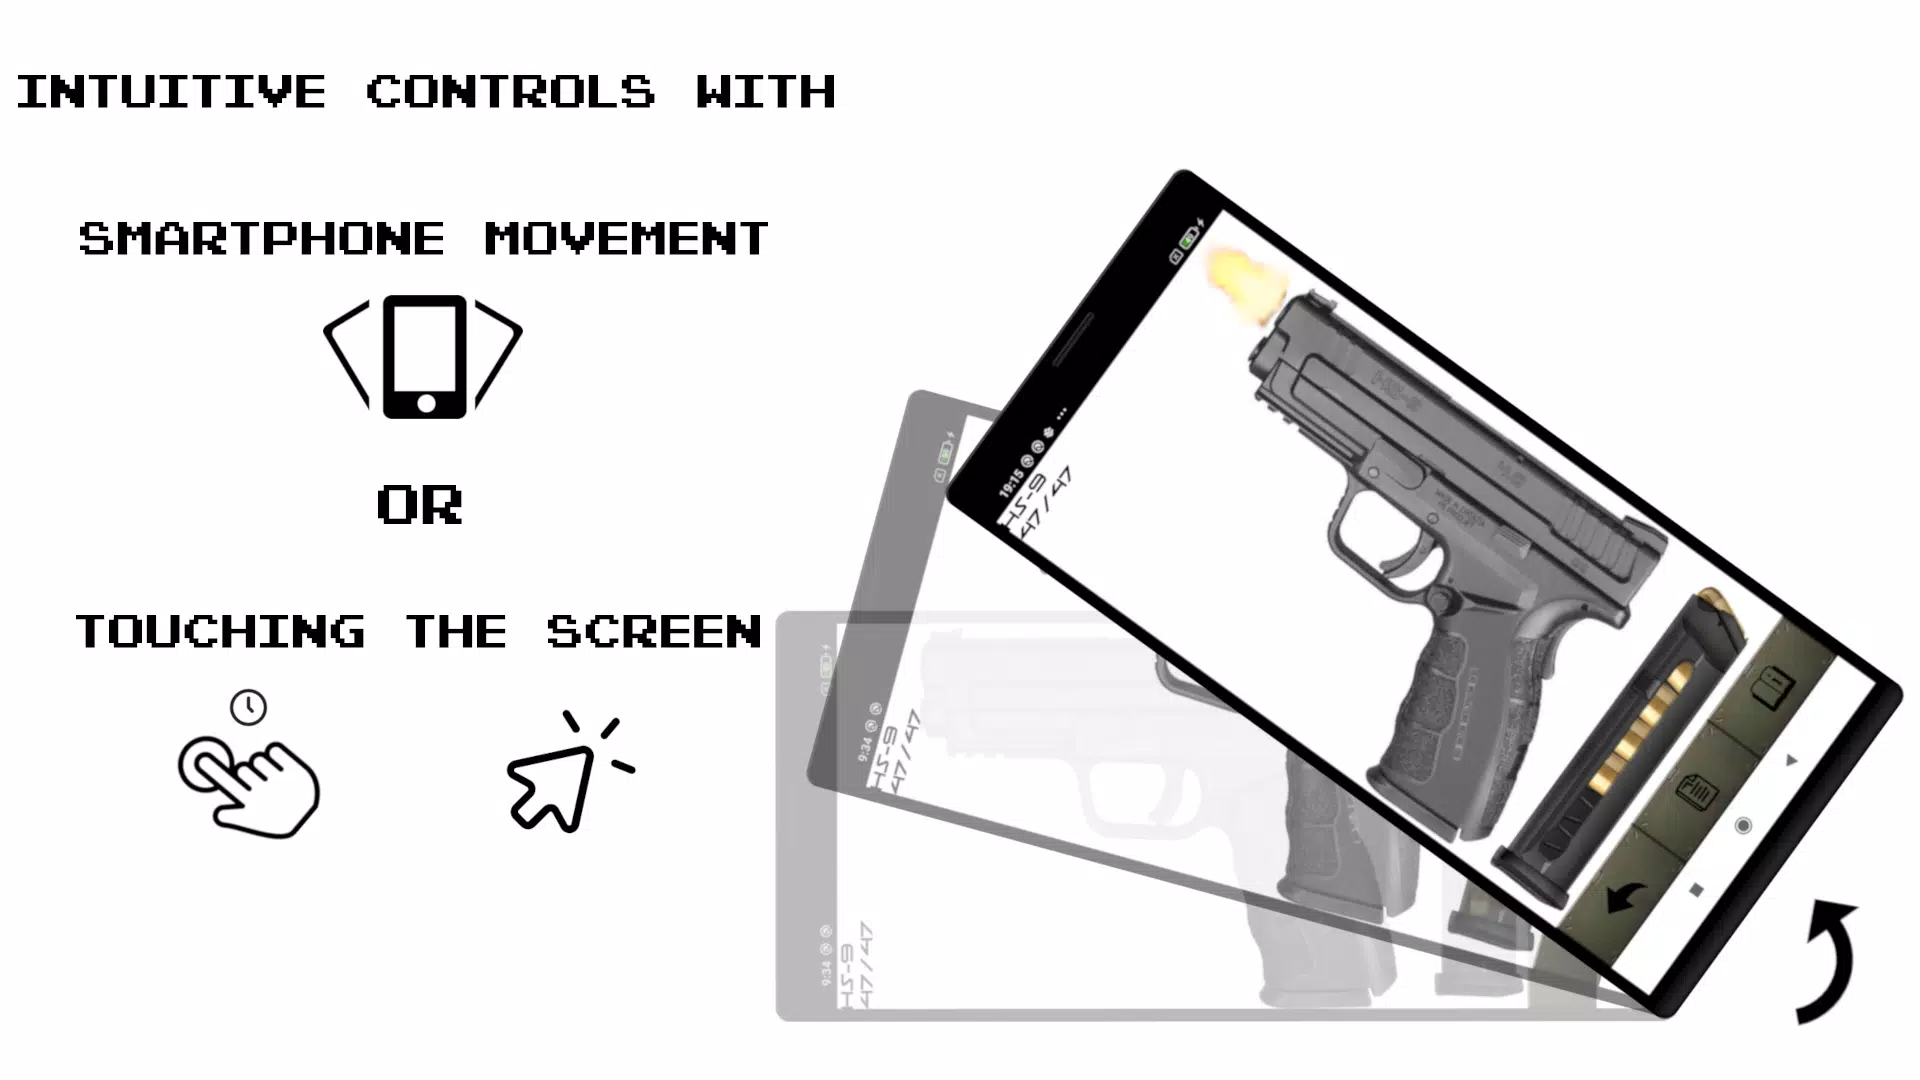 Download do APK de pistolas matadore online armas para Android